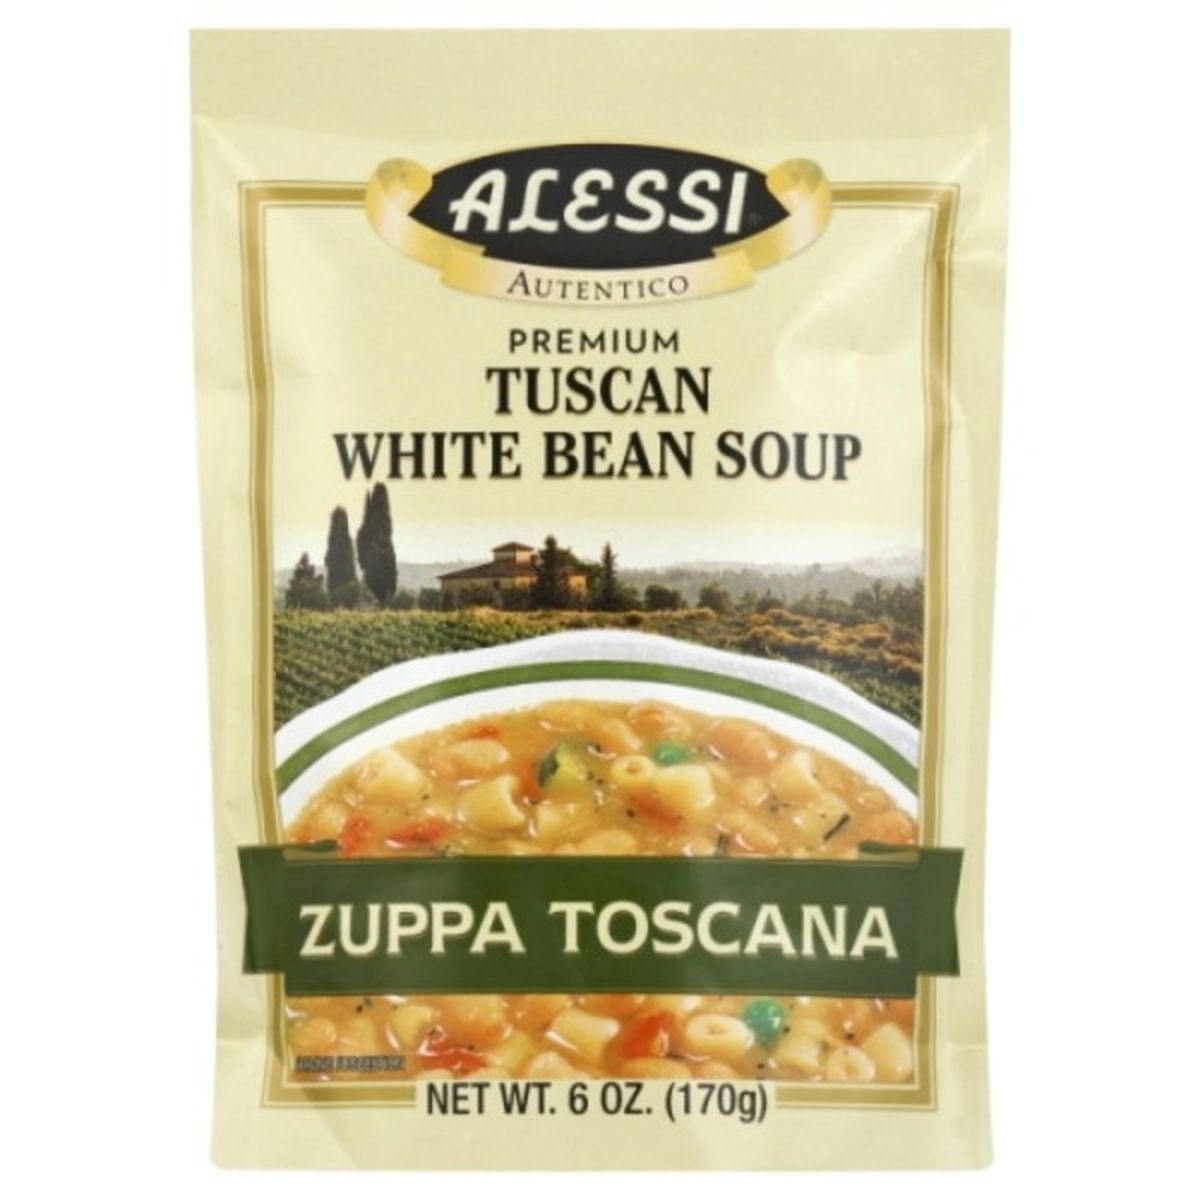 Calories in Alessi White Bean Soup, Premium, Tuscan, Zuppa Toscana